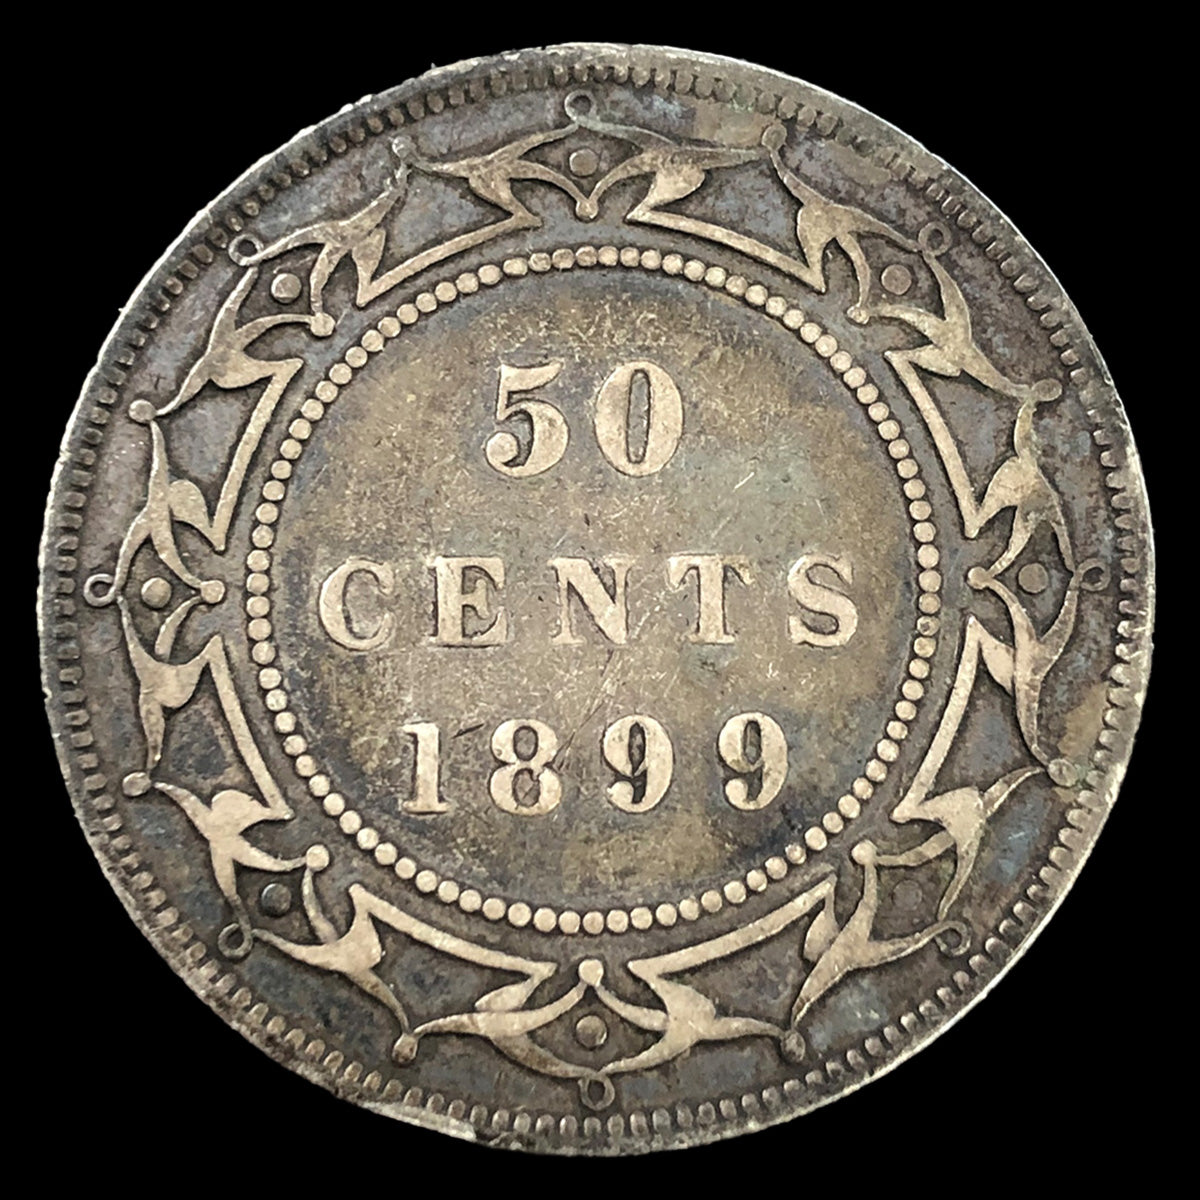 1899 Newfoundland 50 Cents (F)